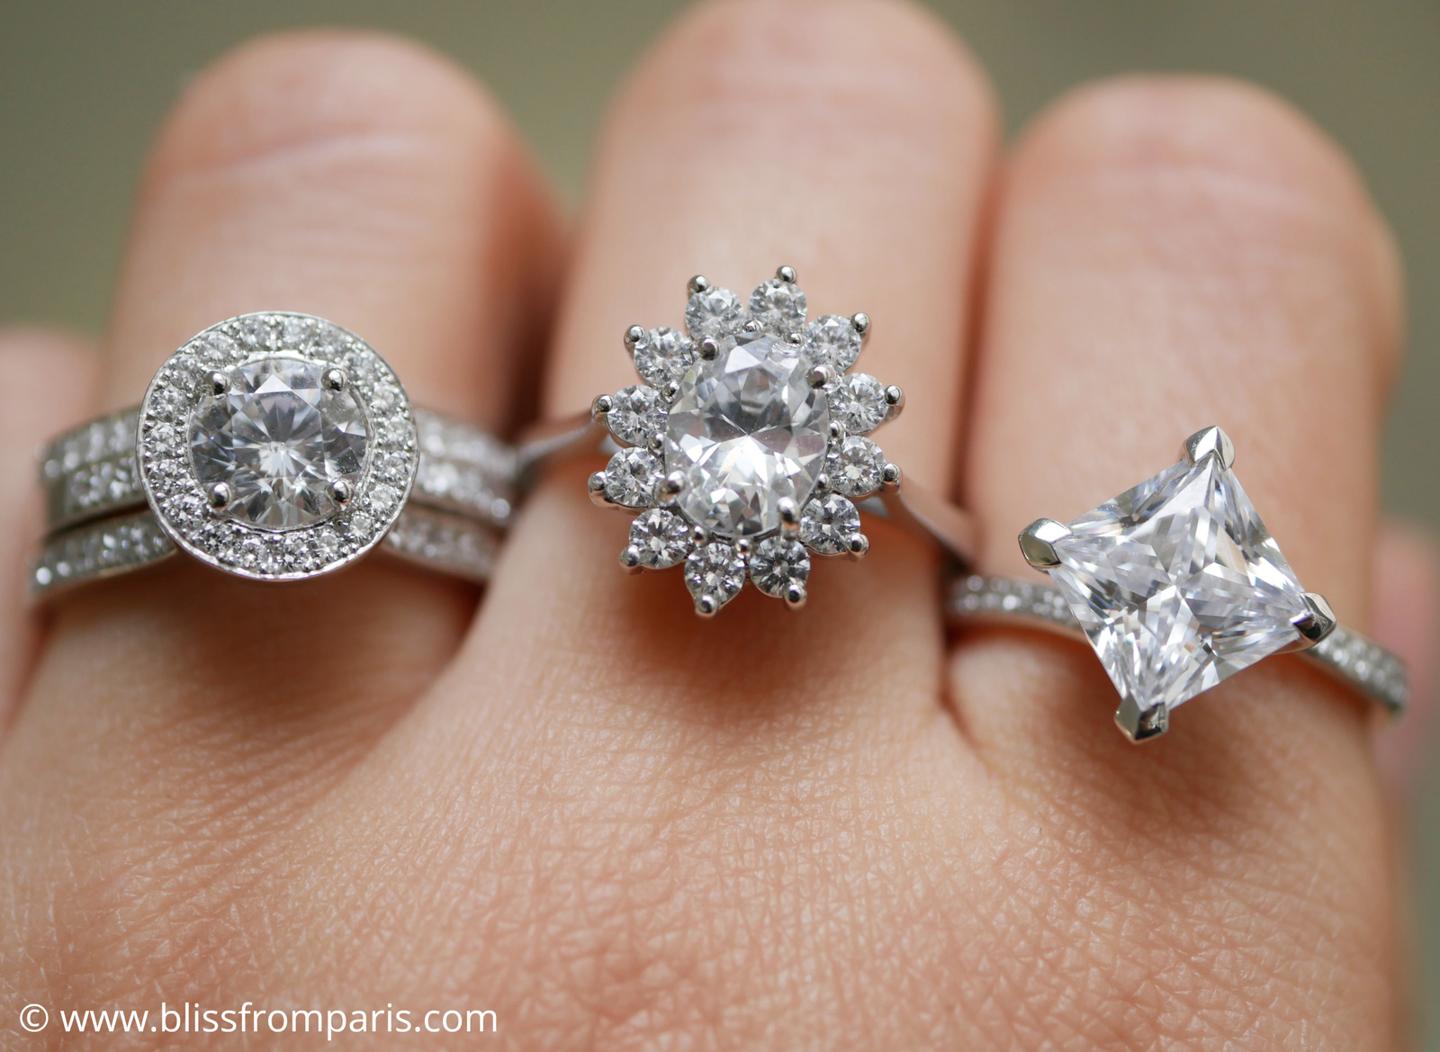 Uw verlovingsring: aan welke vinger draagt u hem?